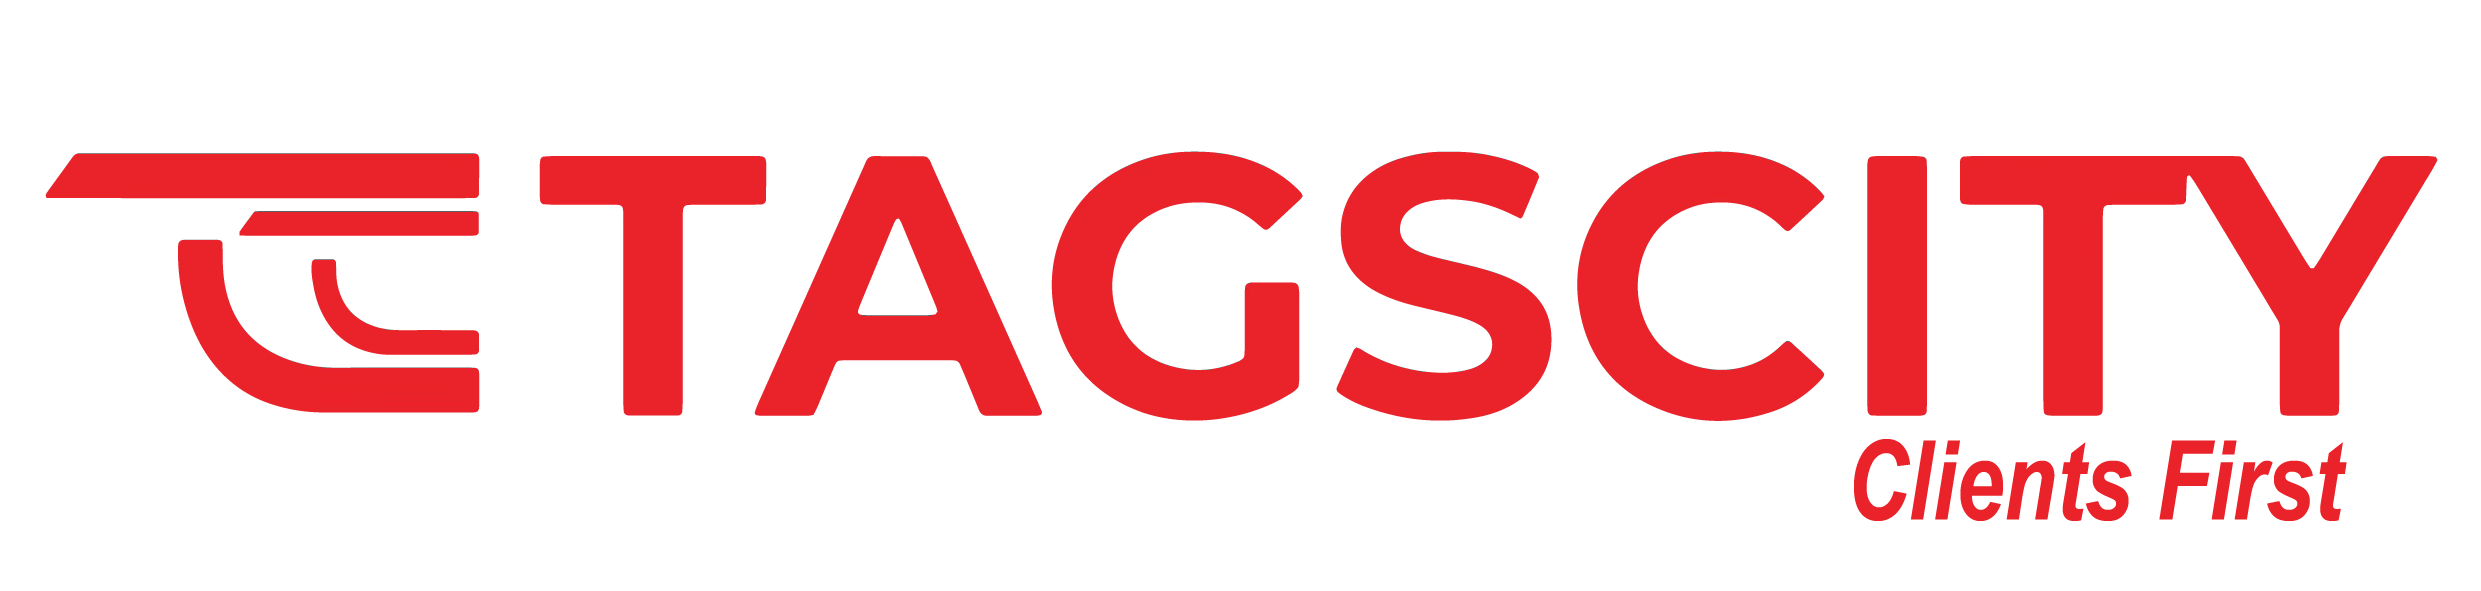 TC TAGSCITY-Logo-Clientfirst-transparent bg